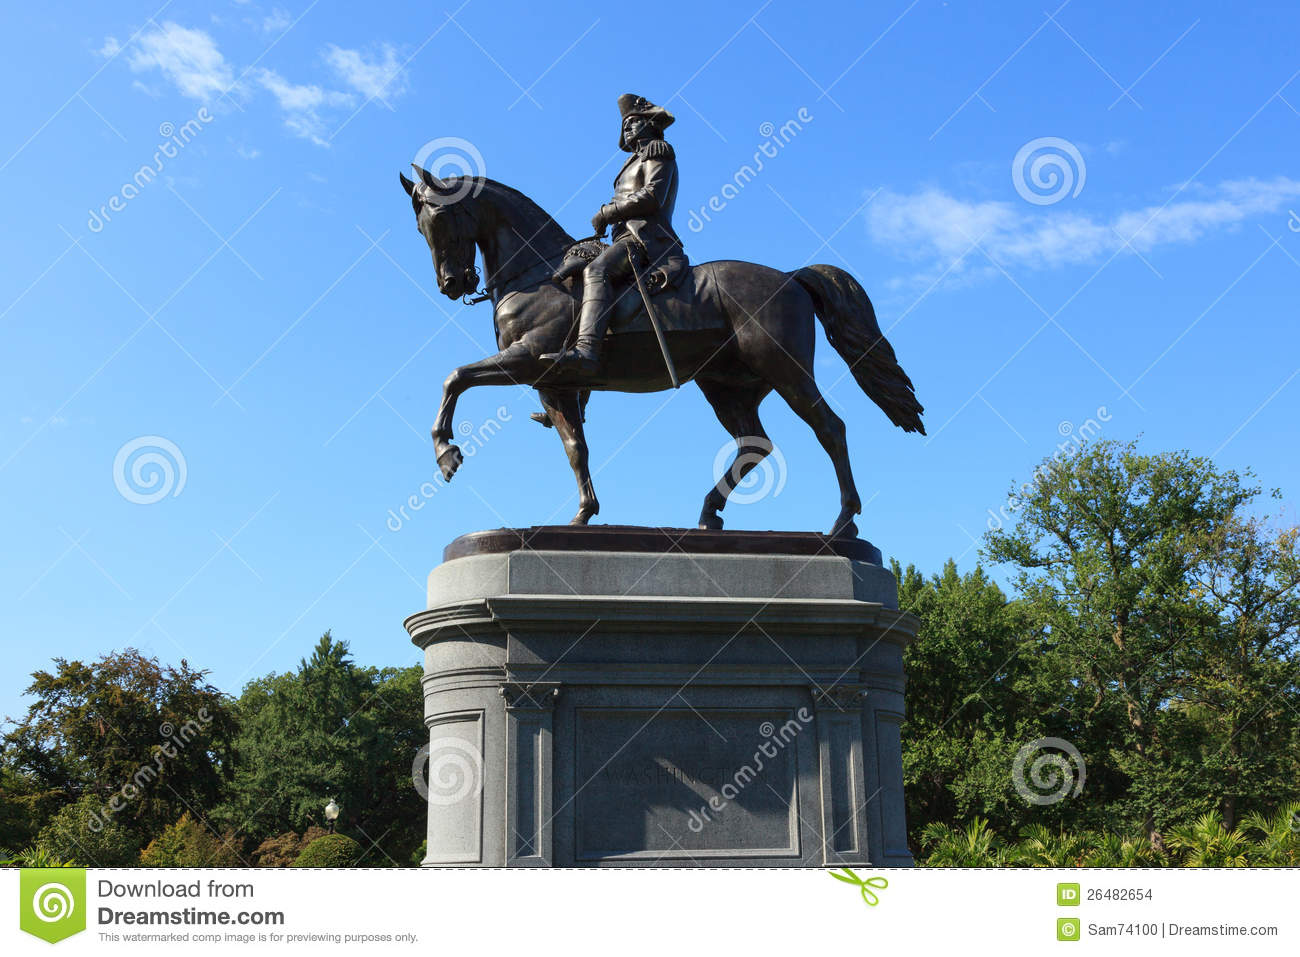 George Washington Statue In Boston Common Park Stock Images   Image